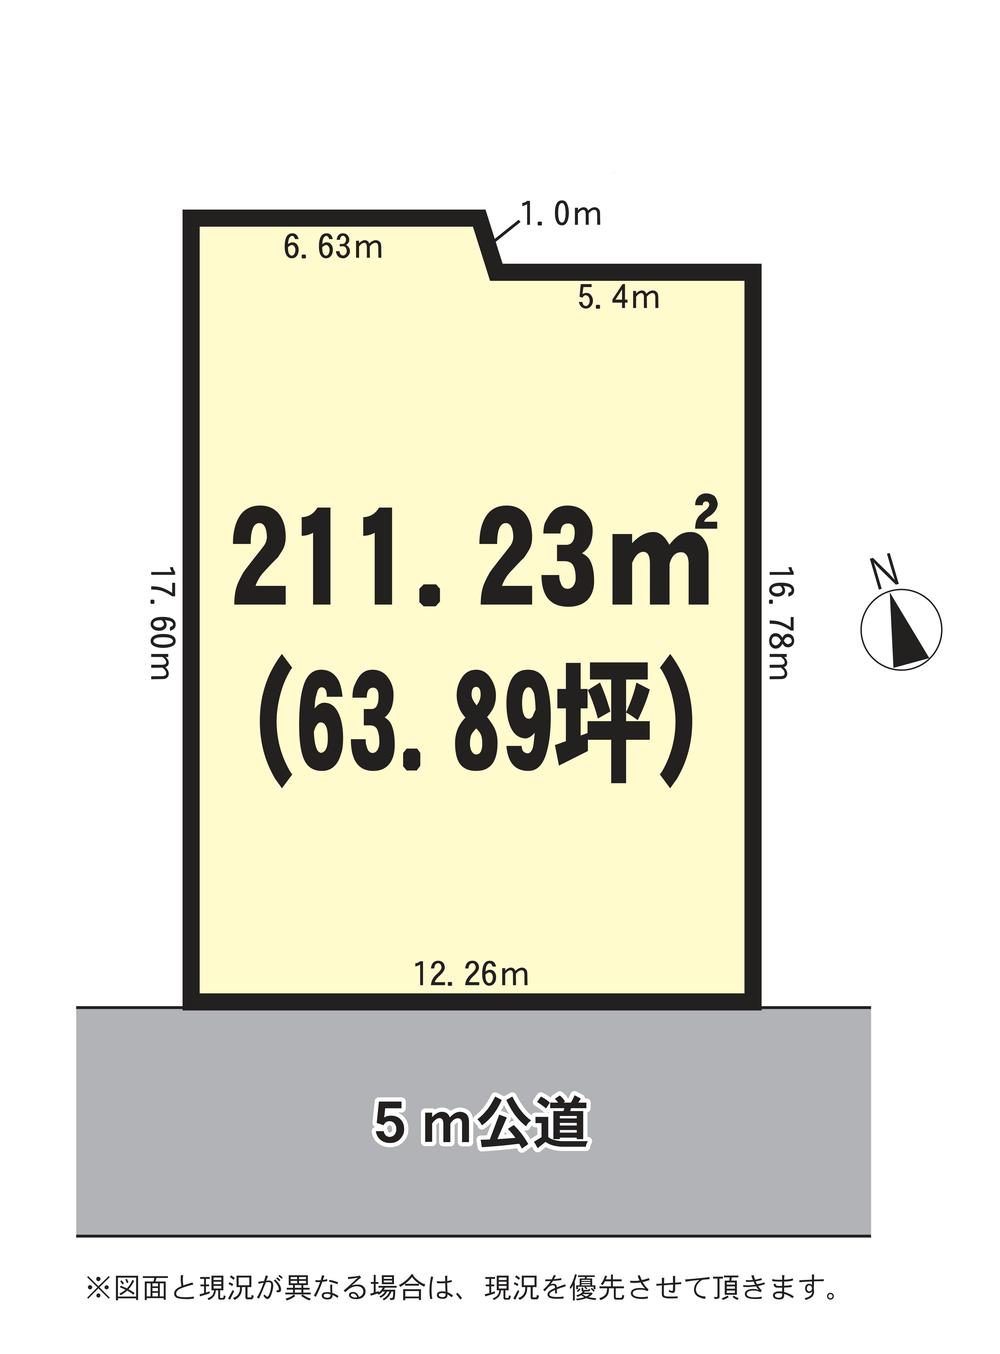 Compartment figure. Land price 9.8 million yen, Land area 211.23 sq m